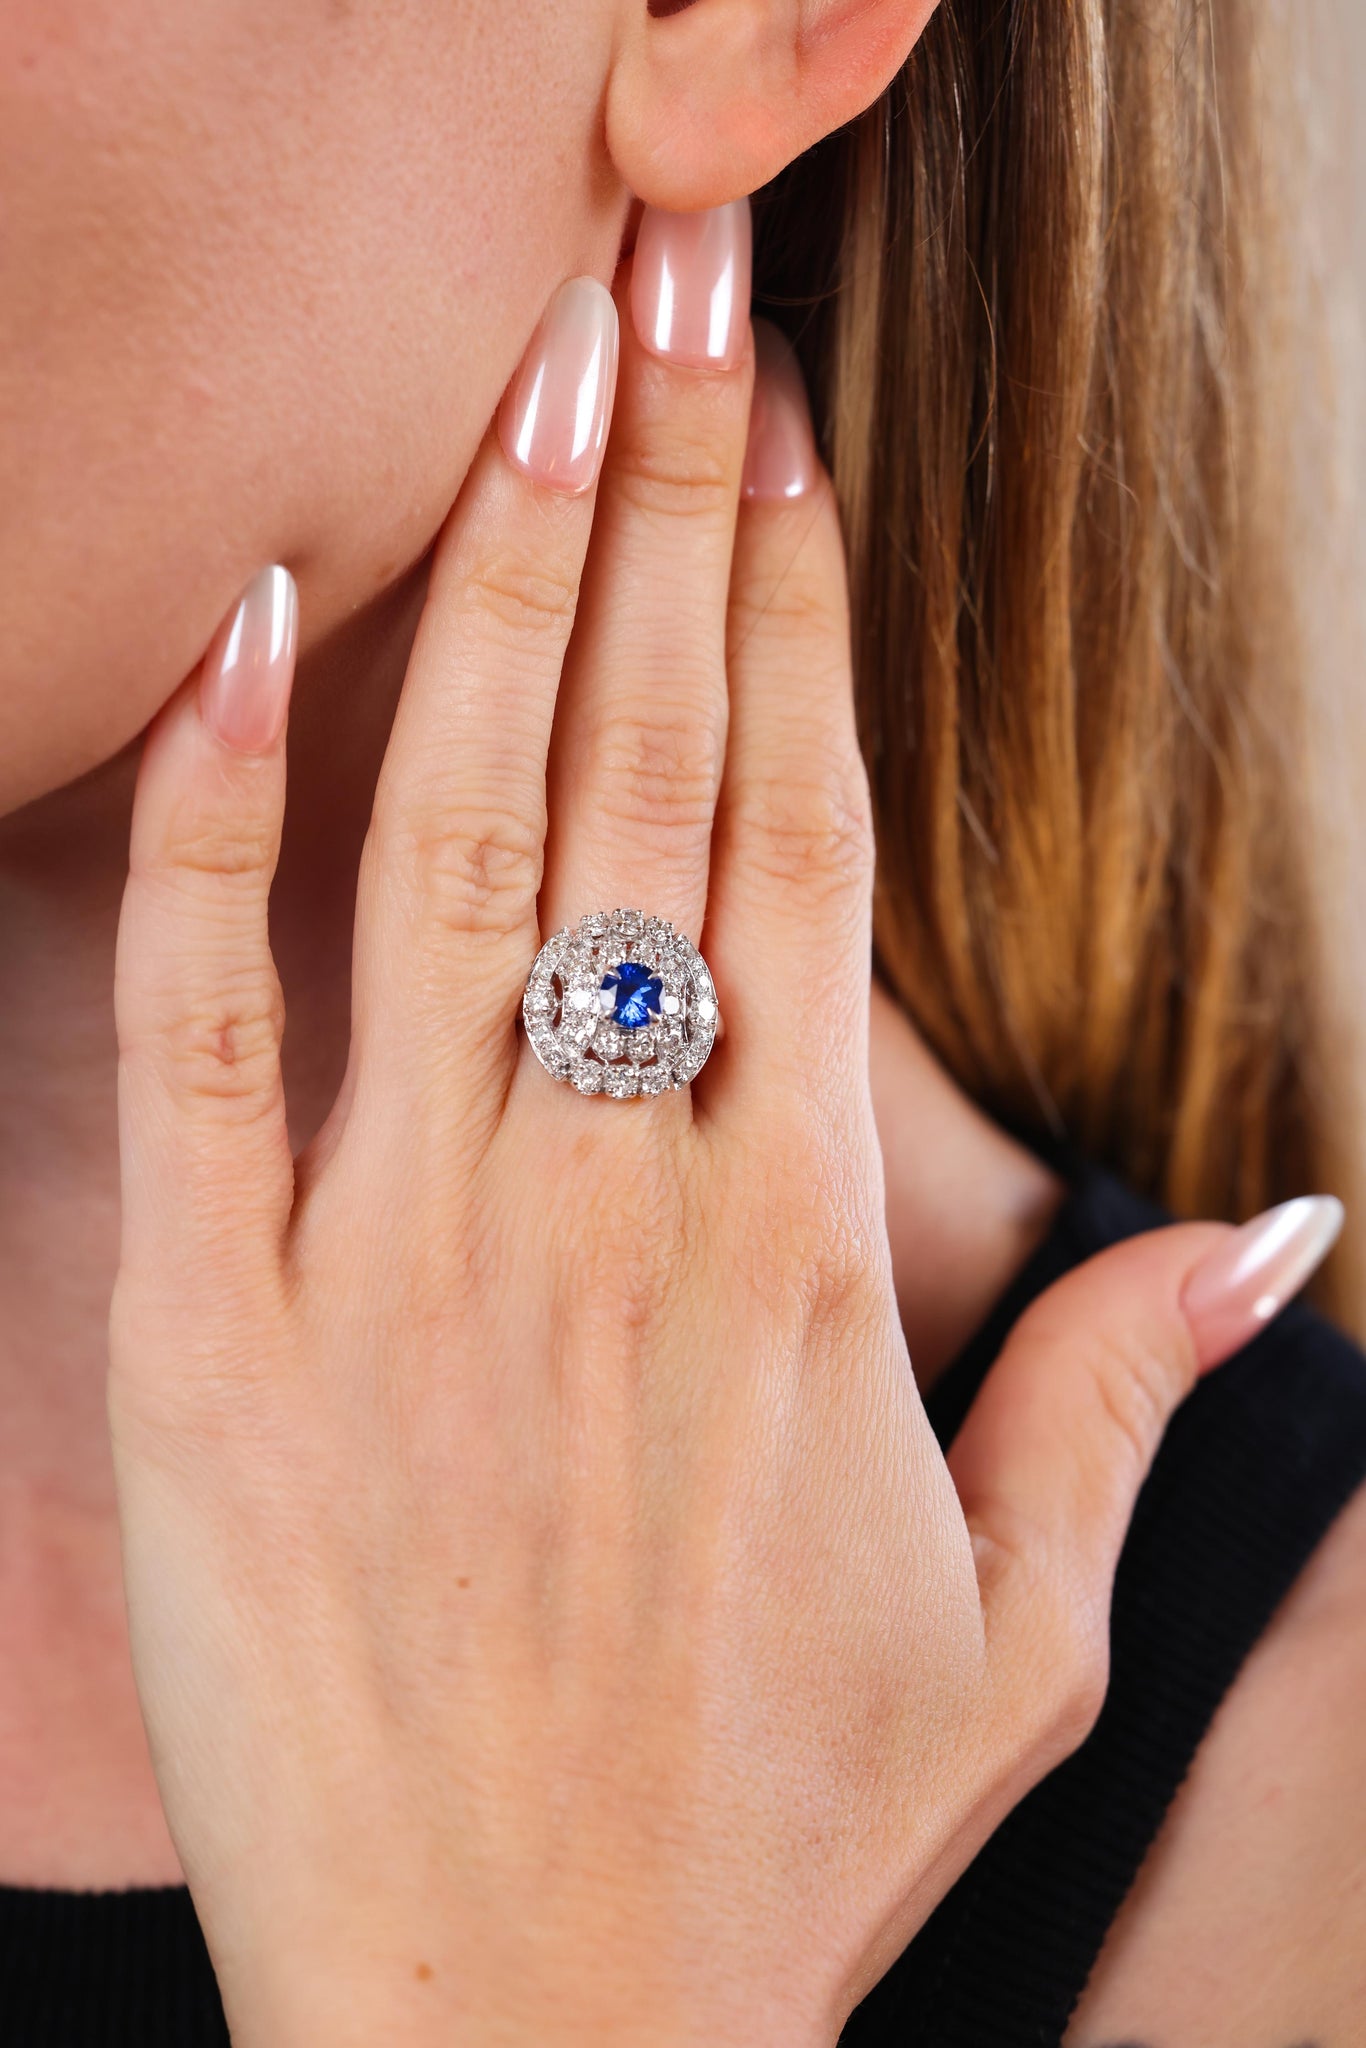 Sapphire Diamond Platinum Cluster Ring